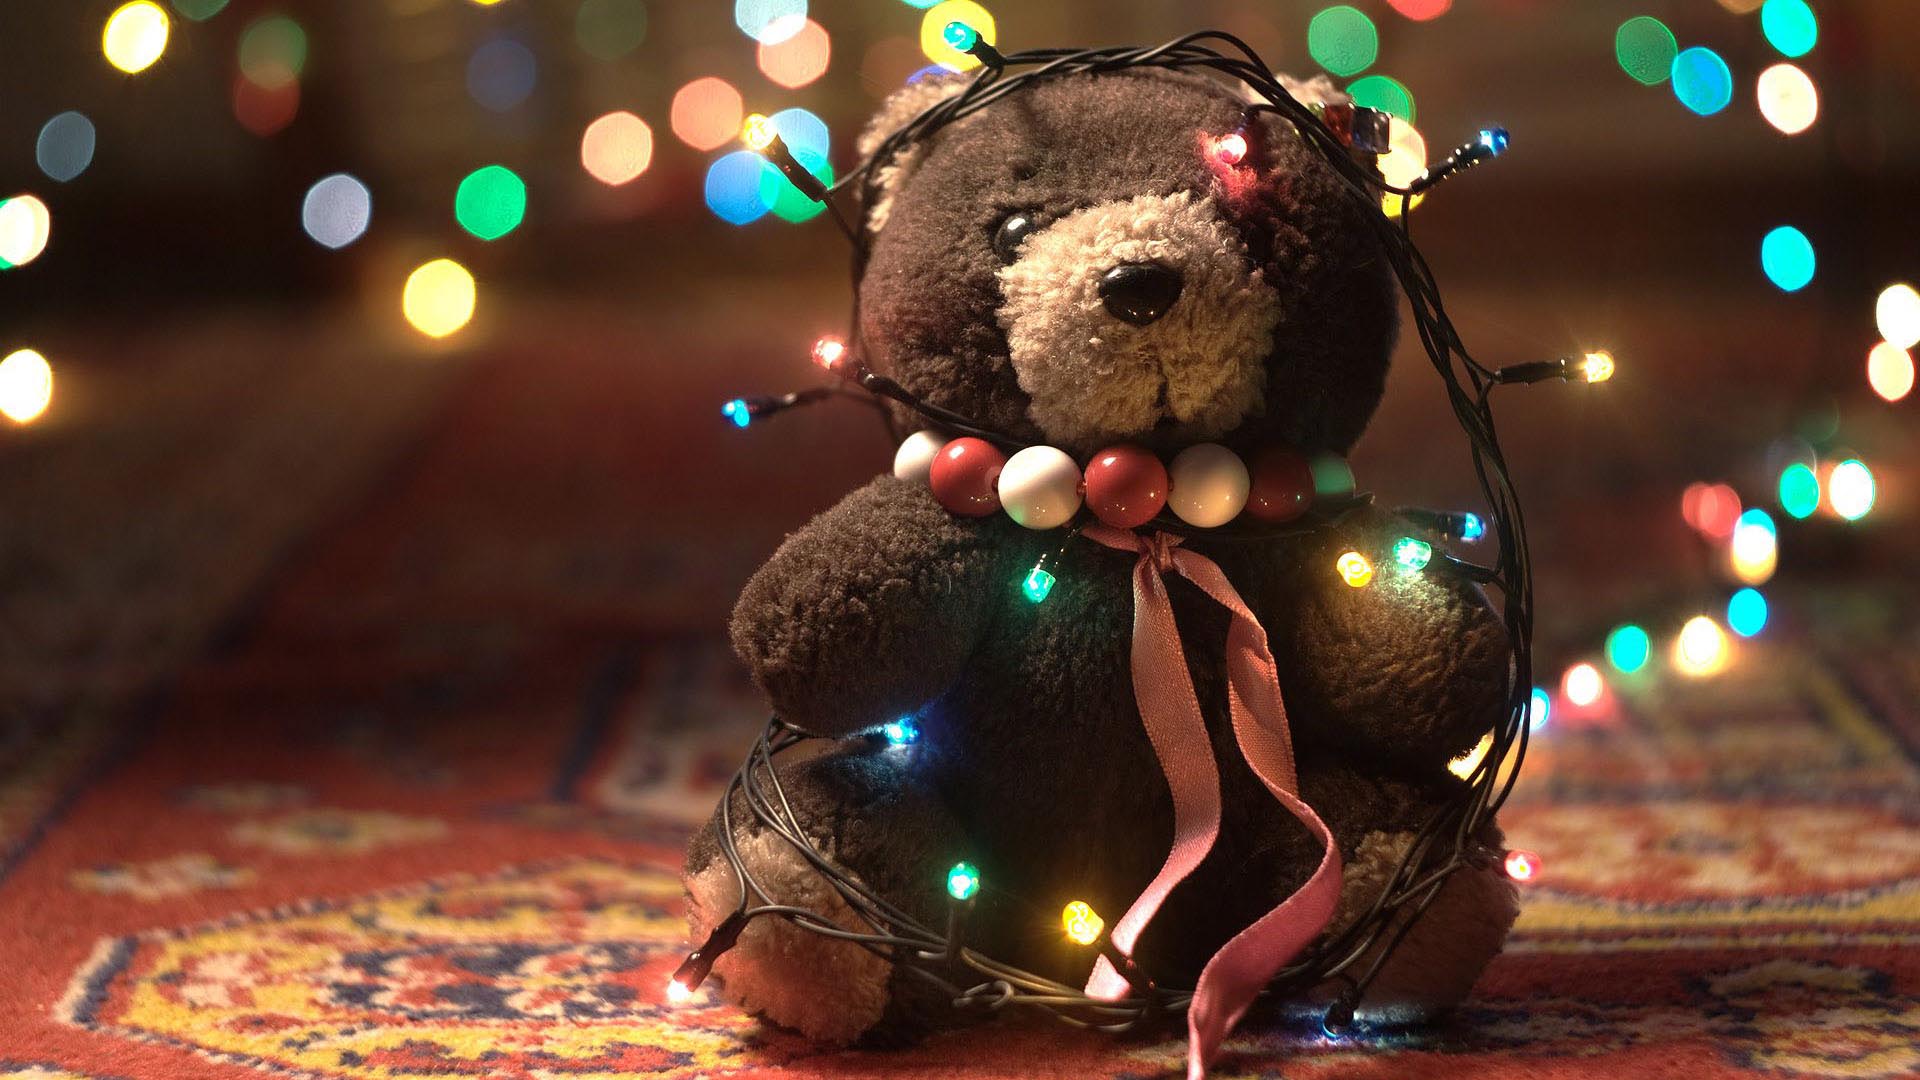 image For > Tumblr Background Christmas Lights